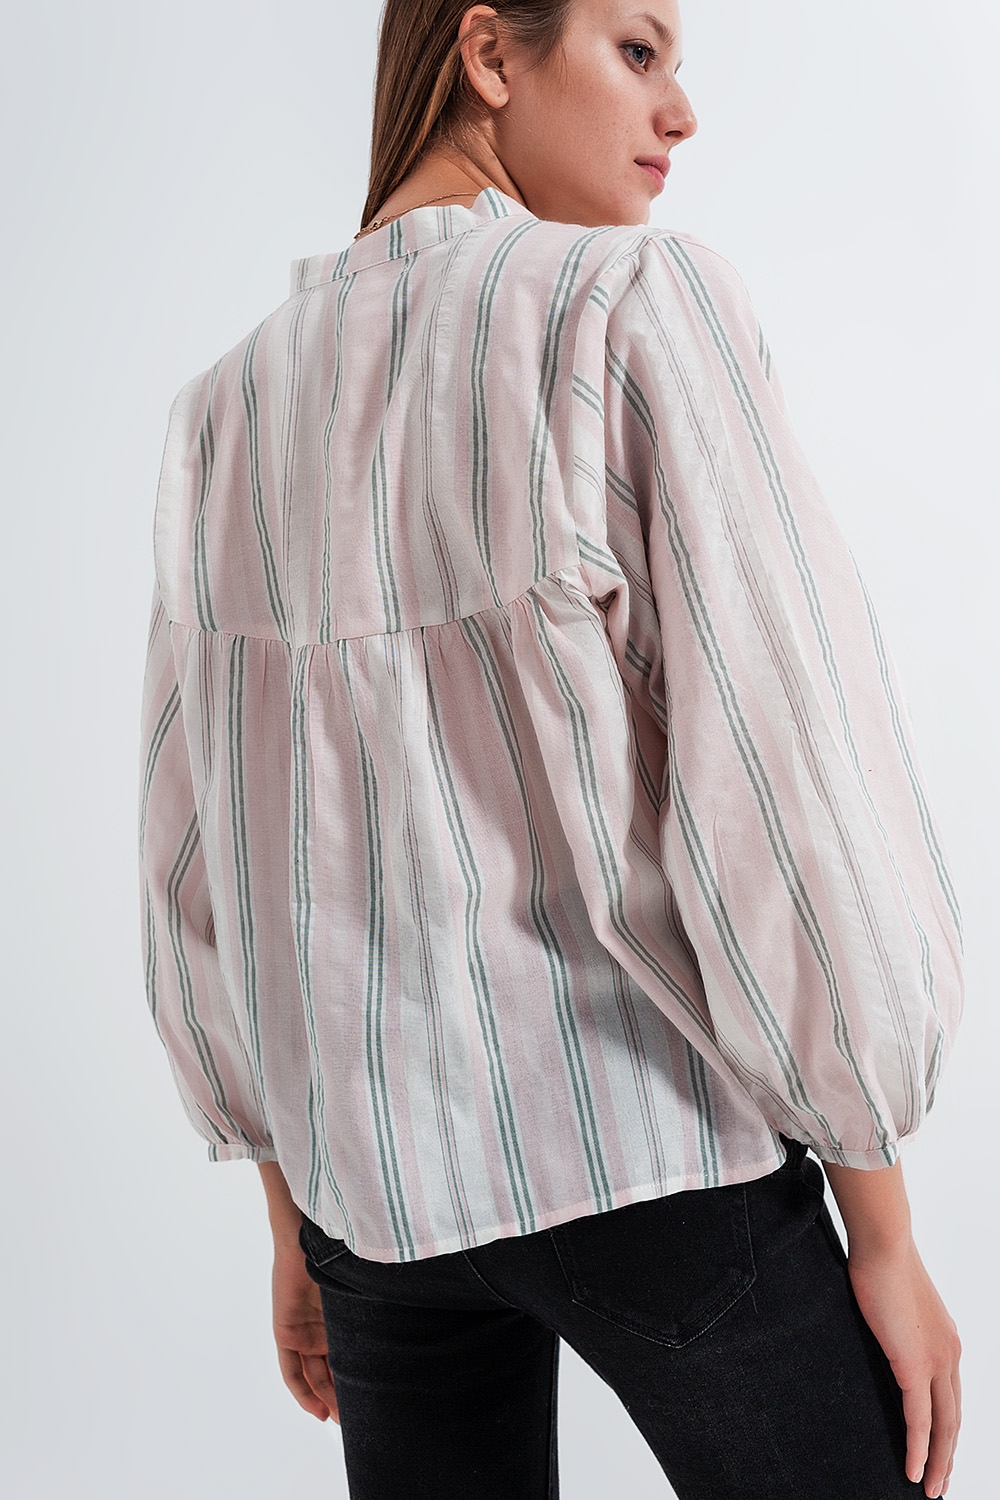 Grandad shirt in pink stripe